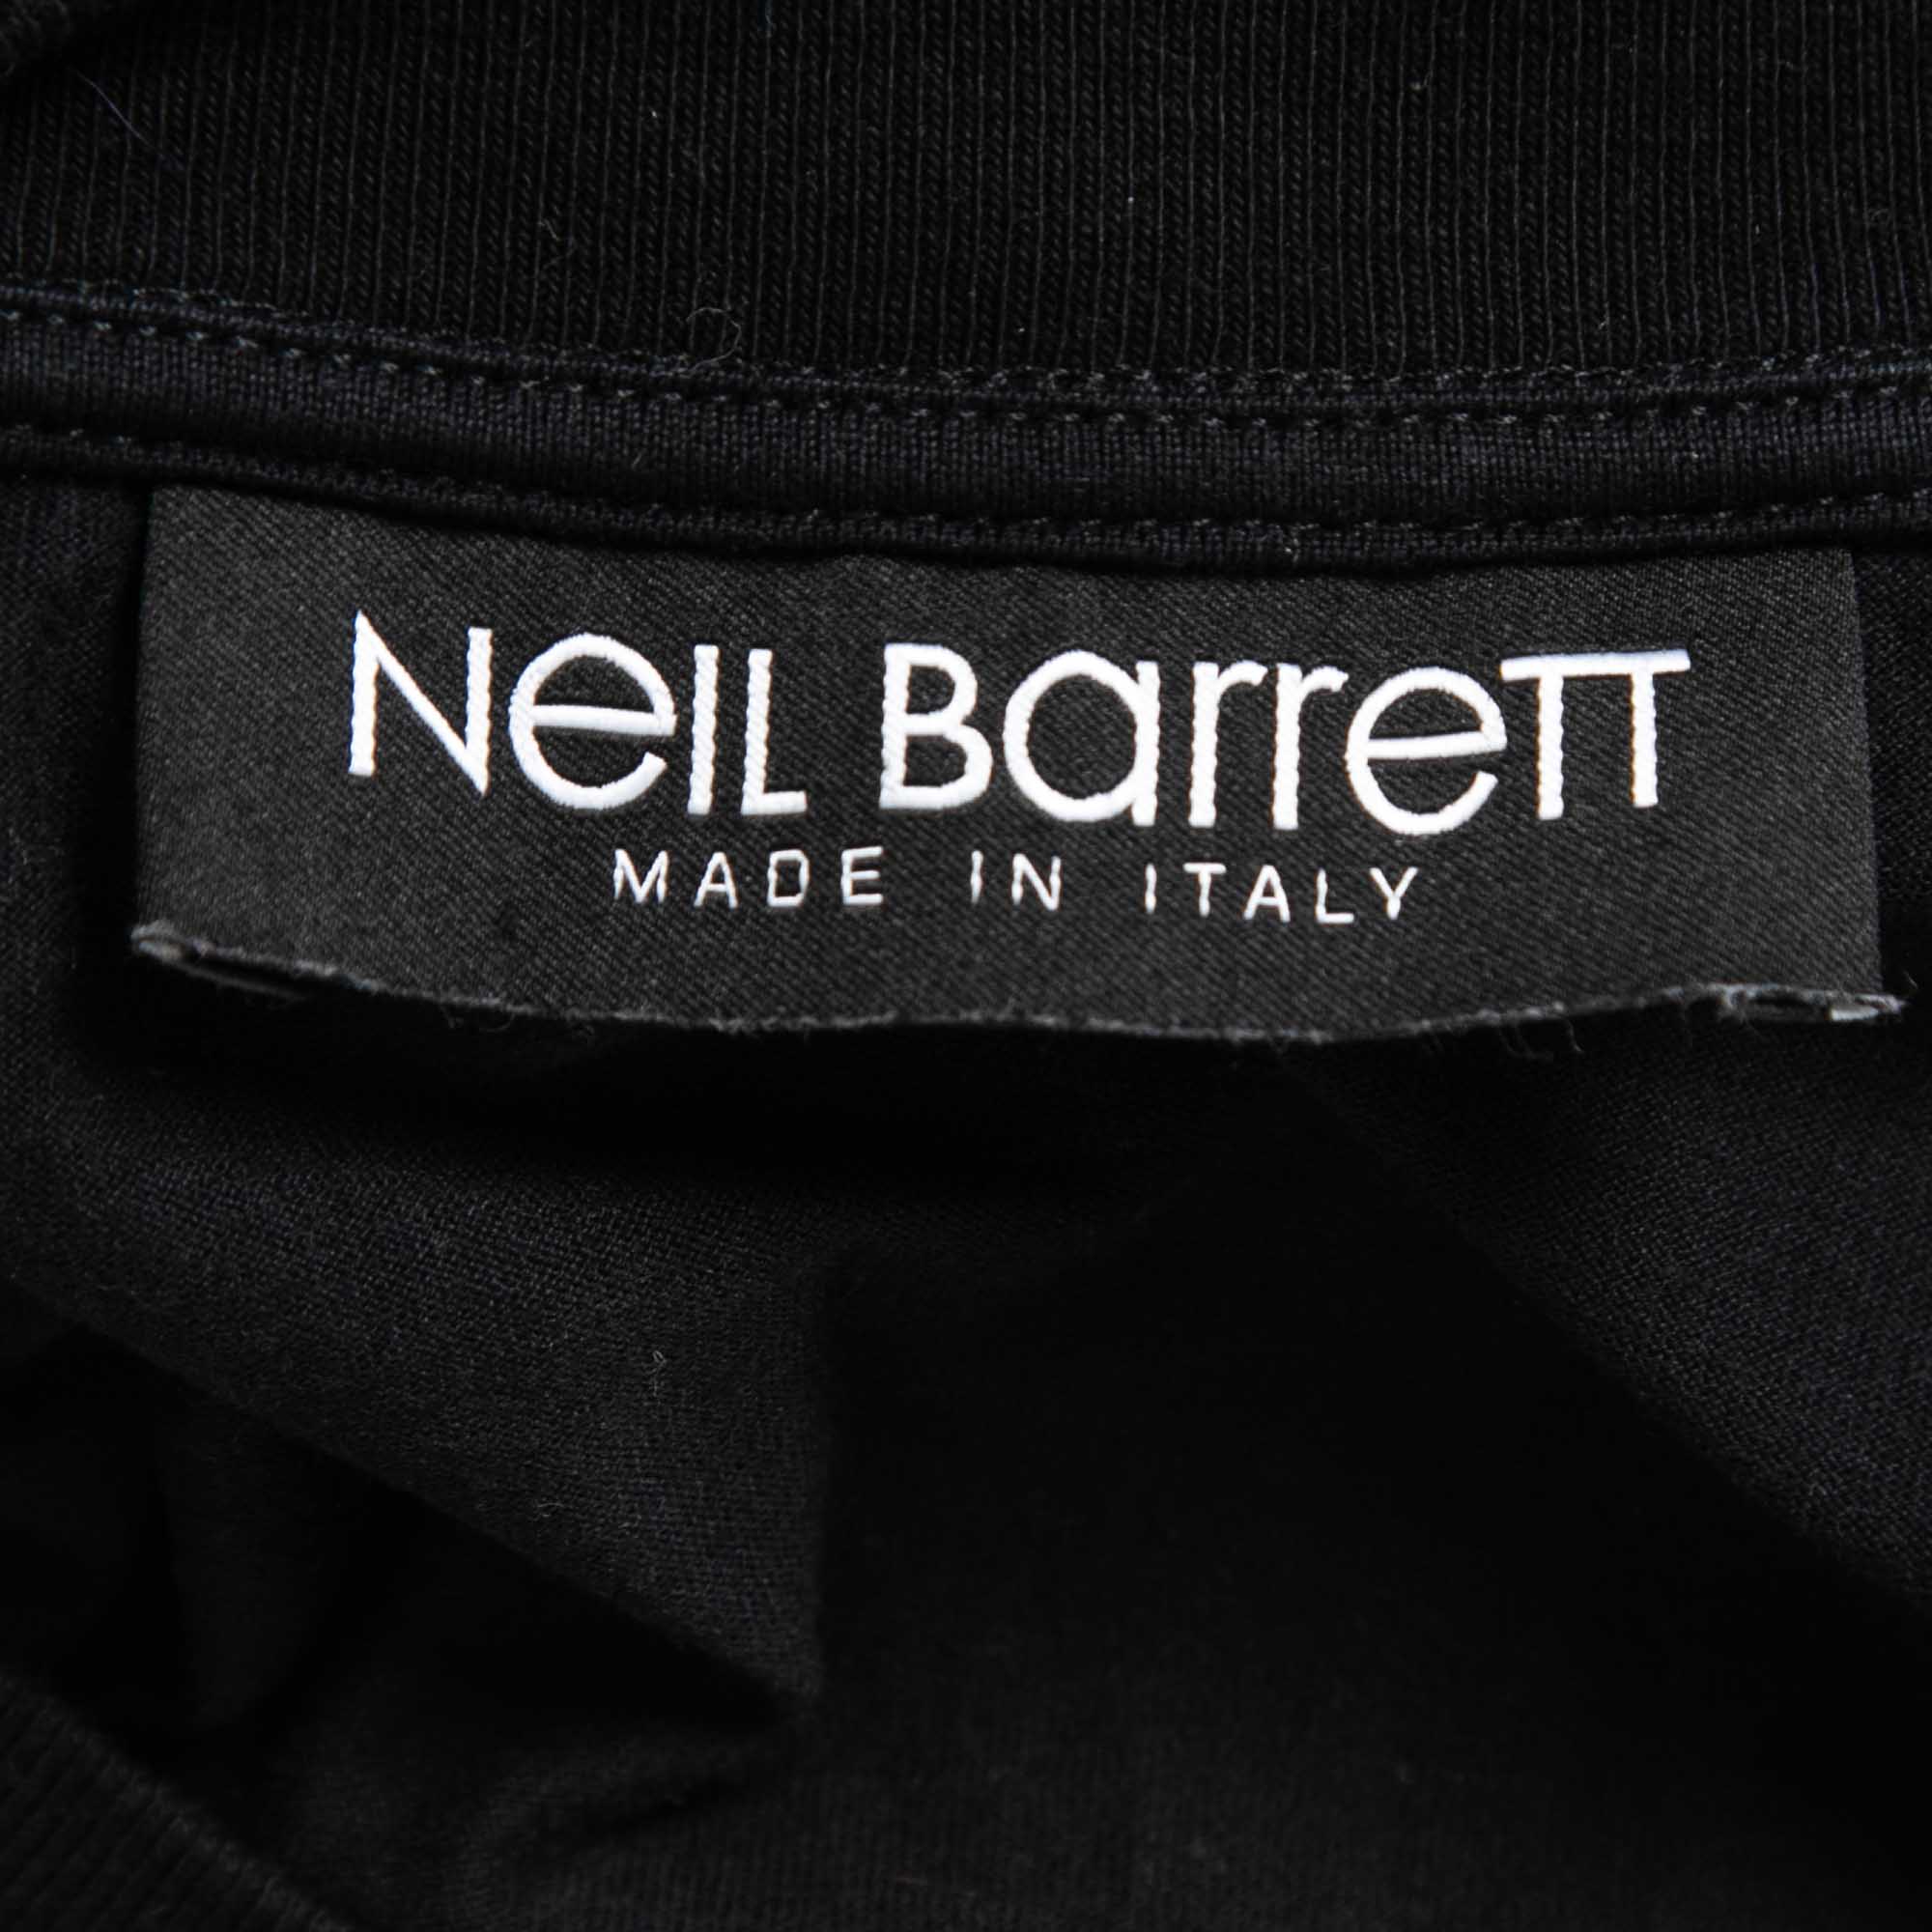 Neil Barrett Black Zeus Rider Print Cotton T-Shirt M